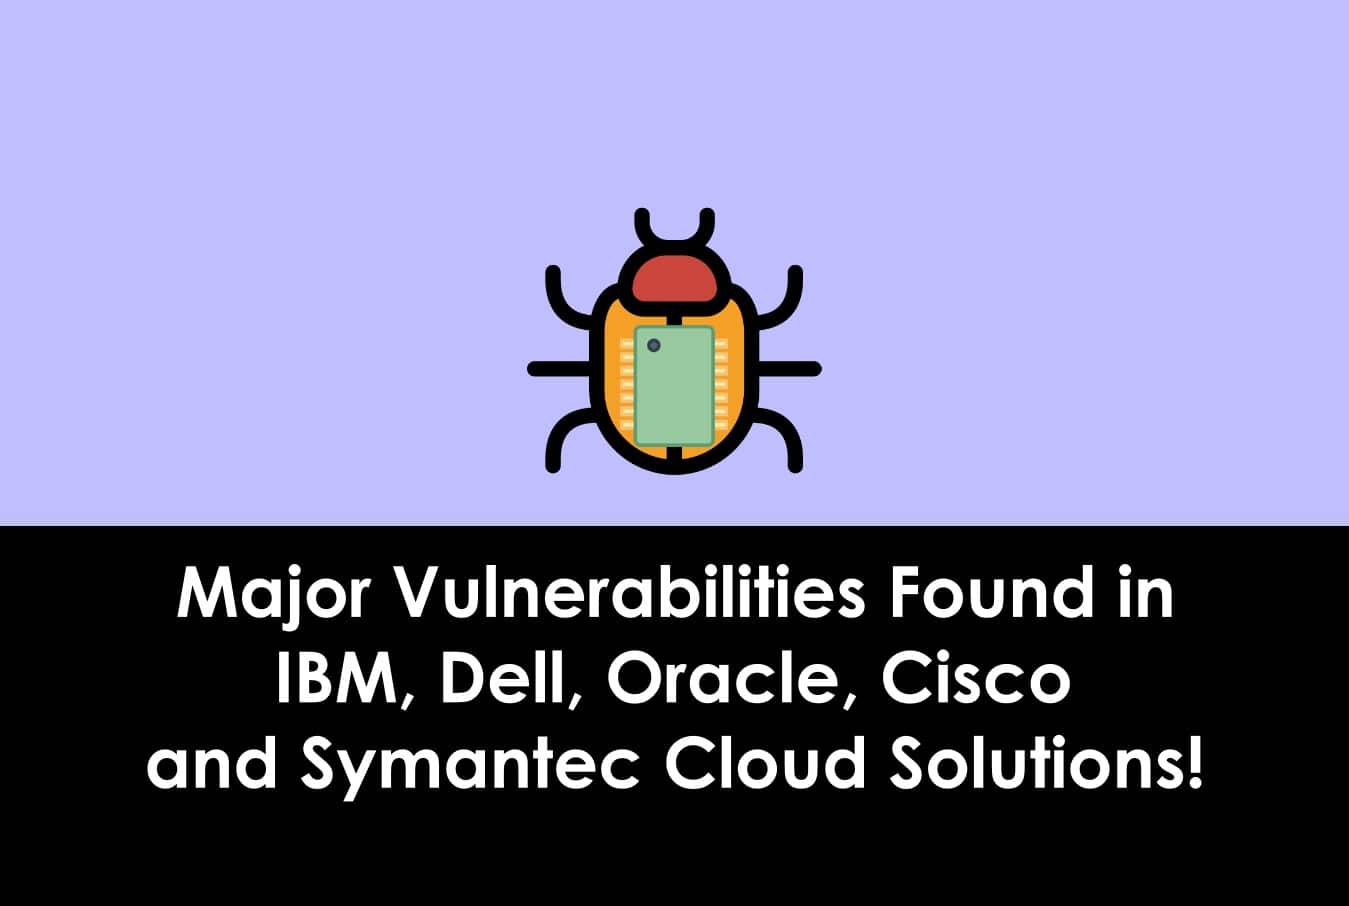 Major vulnerabilities found in cloud solutions 92% virtual appliances